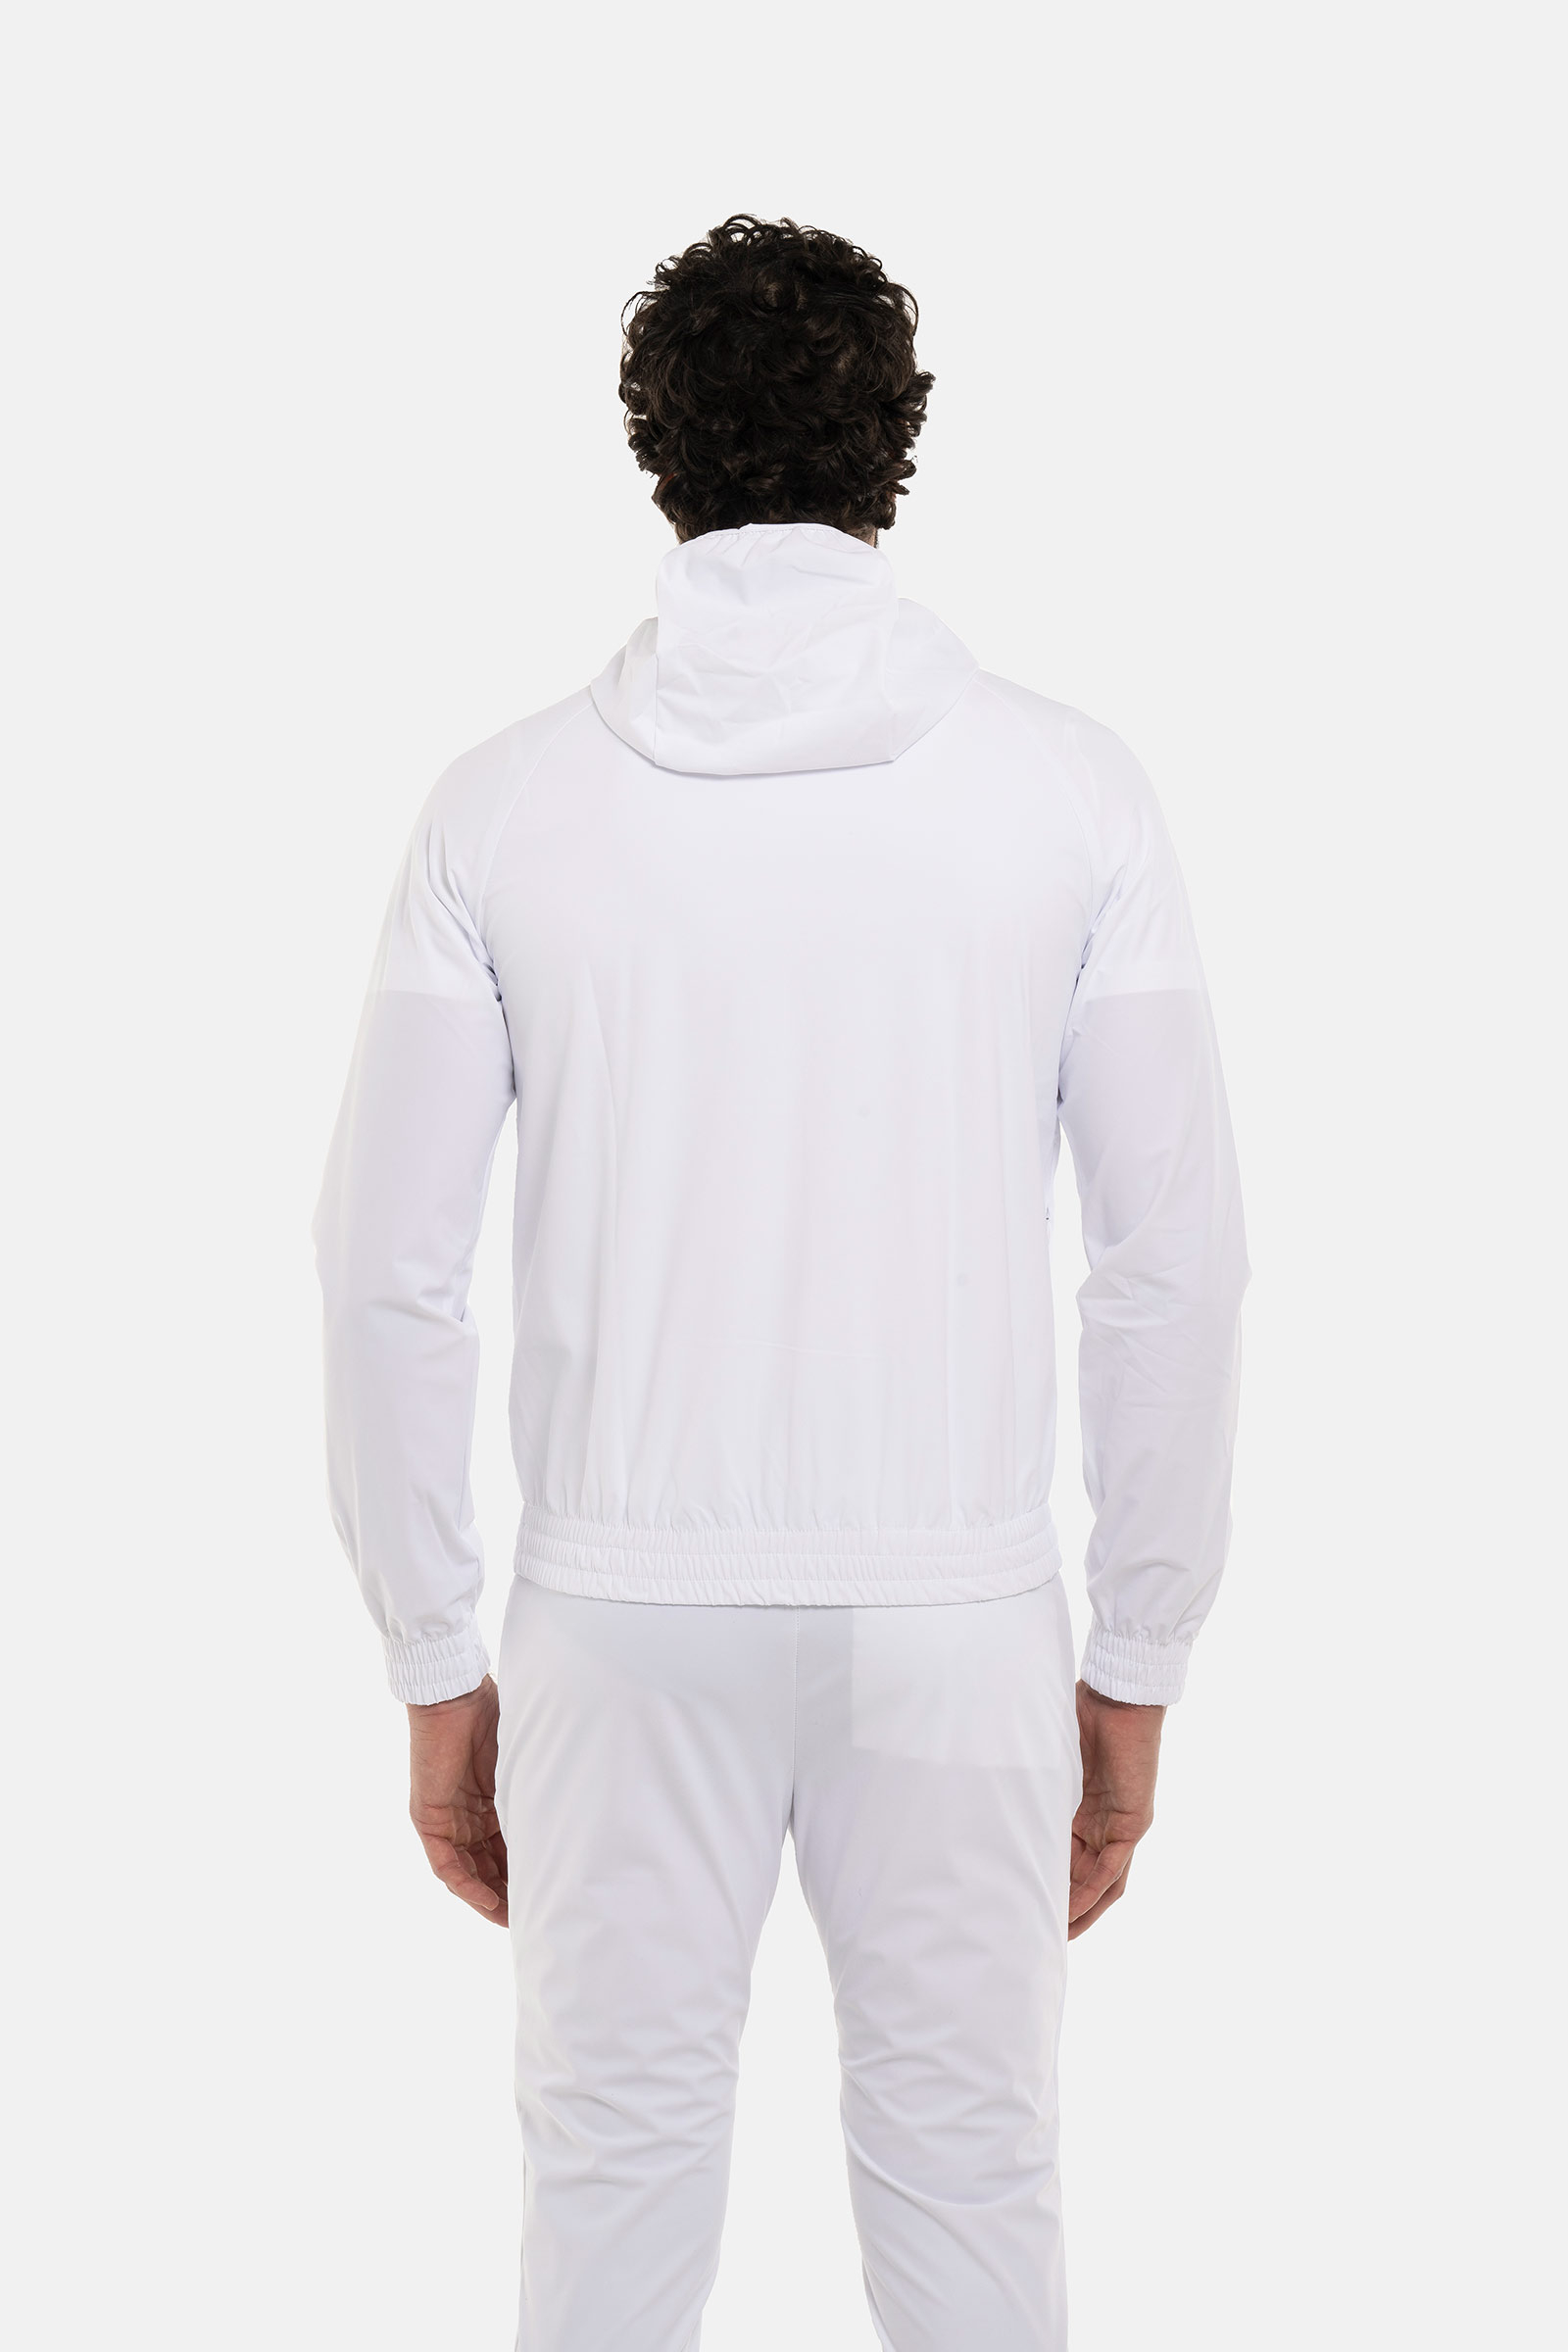 TECH FZ SWEATSHIRT SKULL - WHITE - Abbigliamento sportivo | Hydrogen